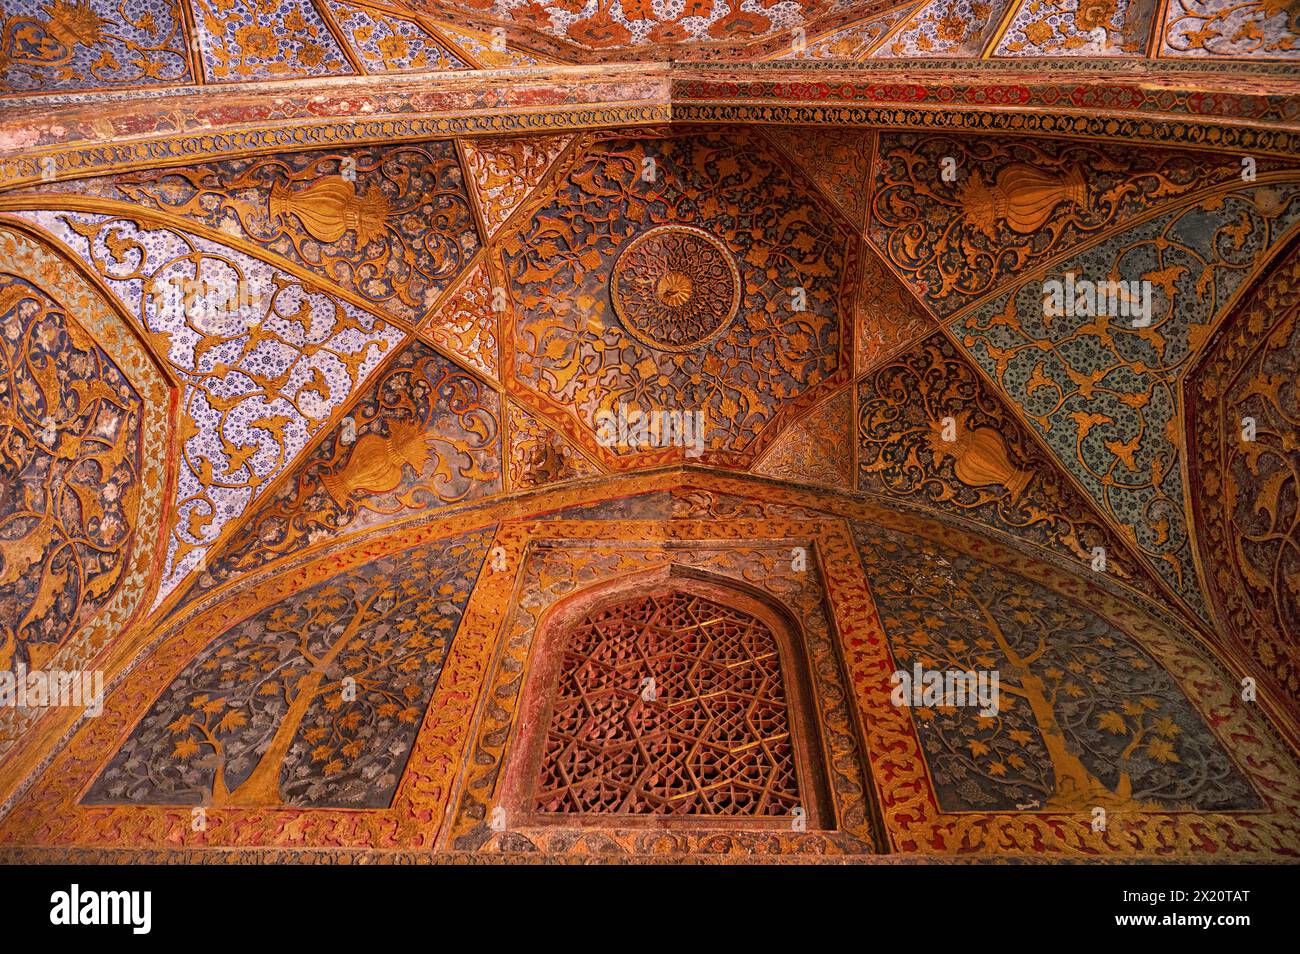 Ceiling of the Akbar's Tomb, Sikandra, Agra, Uttar Pradesh, India Stock Photo